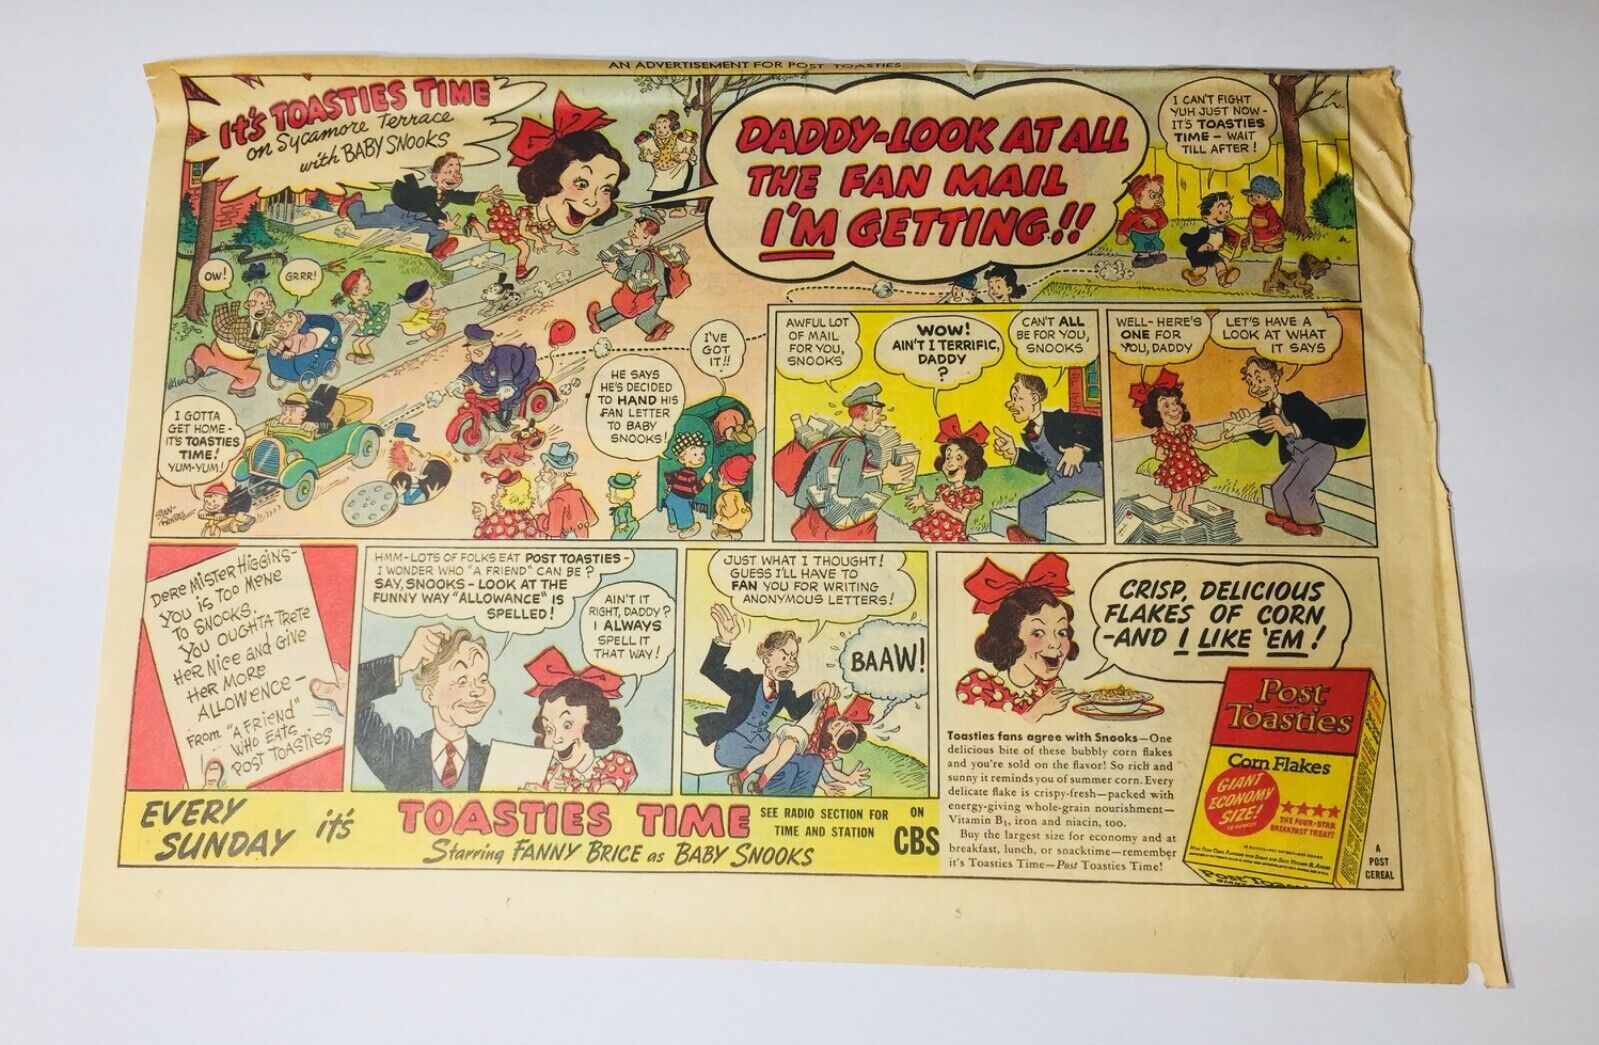 1945 Post Toasties Corn Flakes w/ Baby Snooks cereal comic strip ad 15.5x10.5”